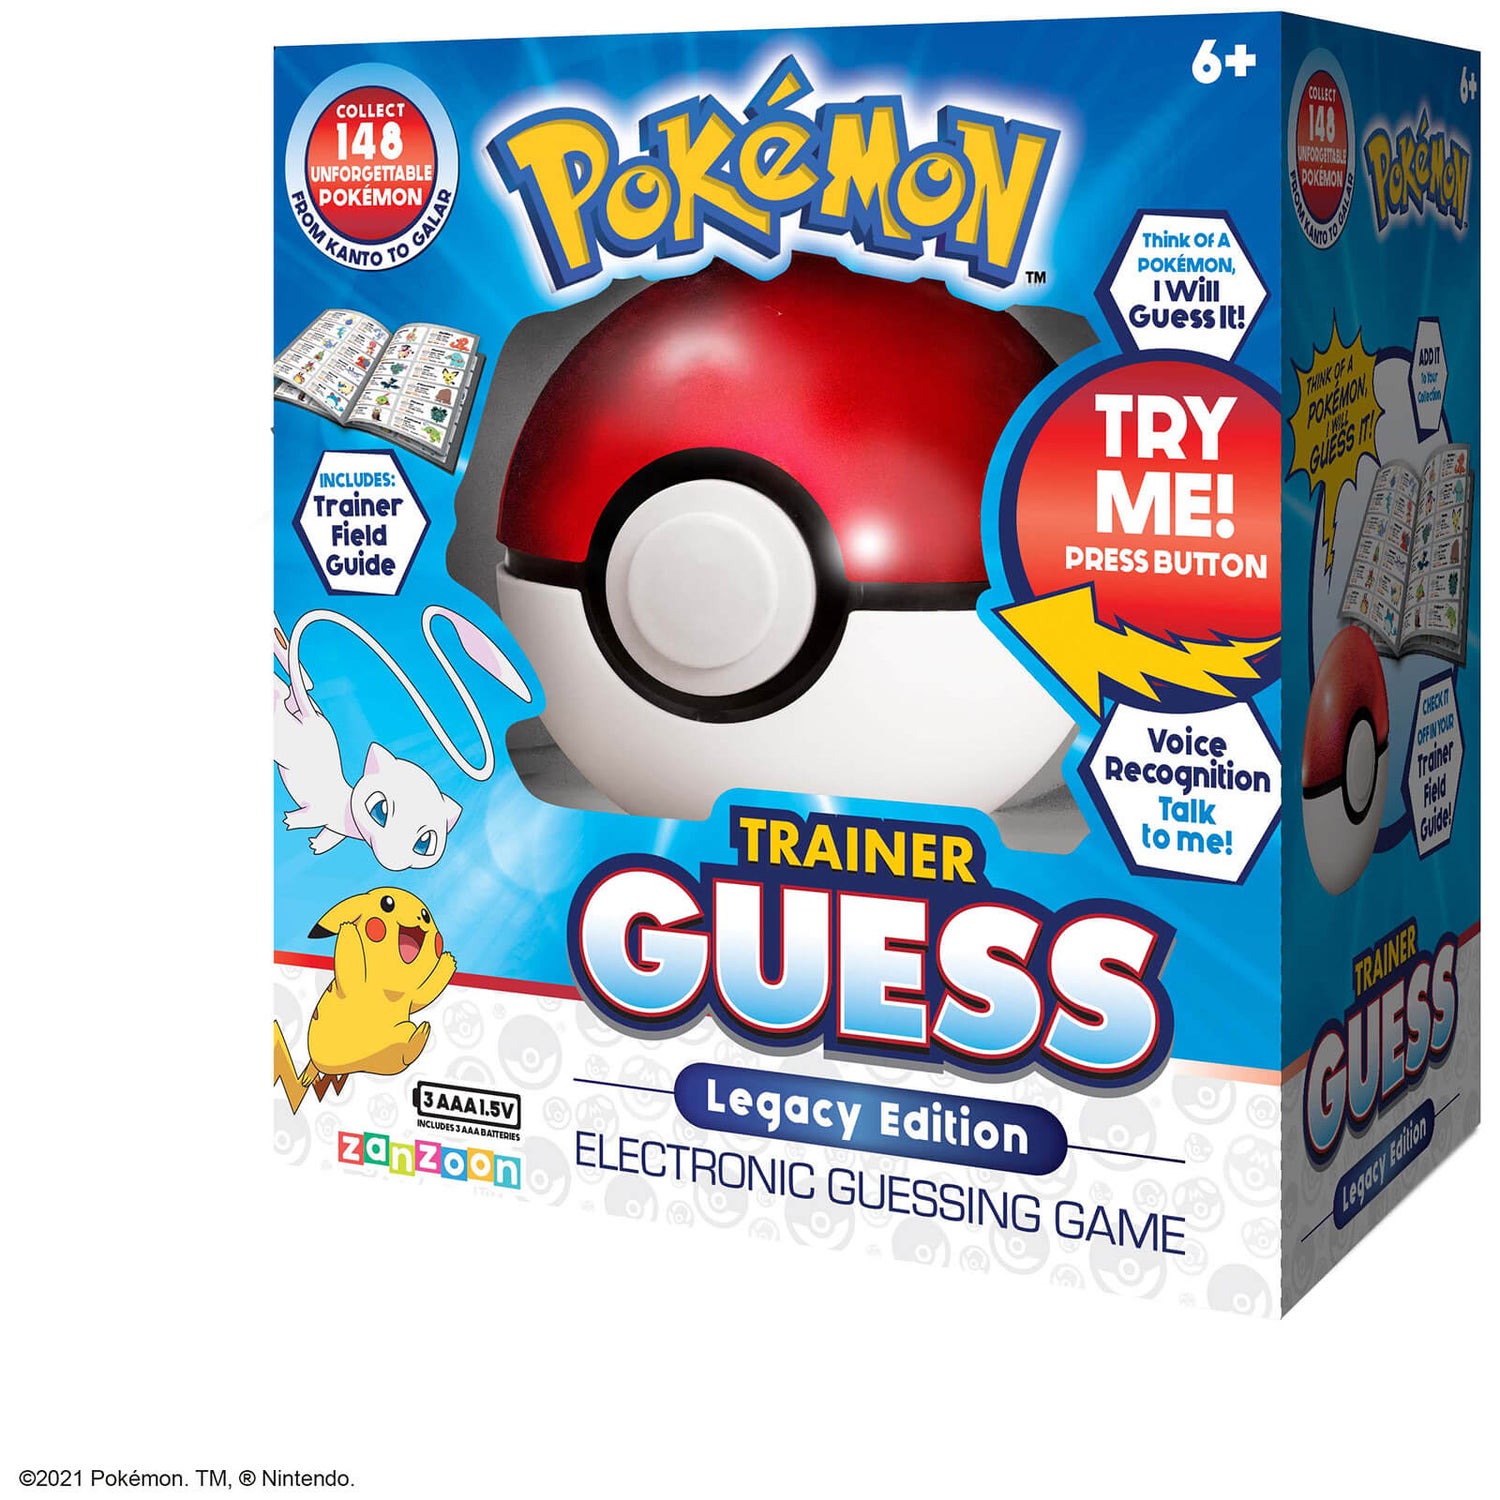 Pokémon Trainer Guess - Legacy Edition